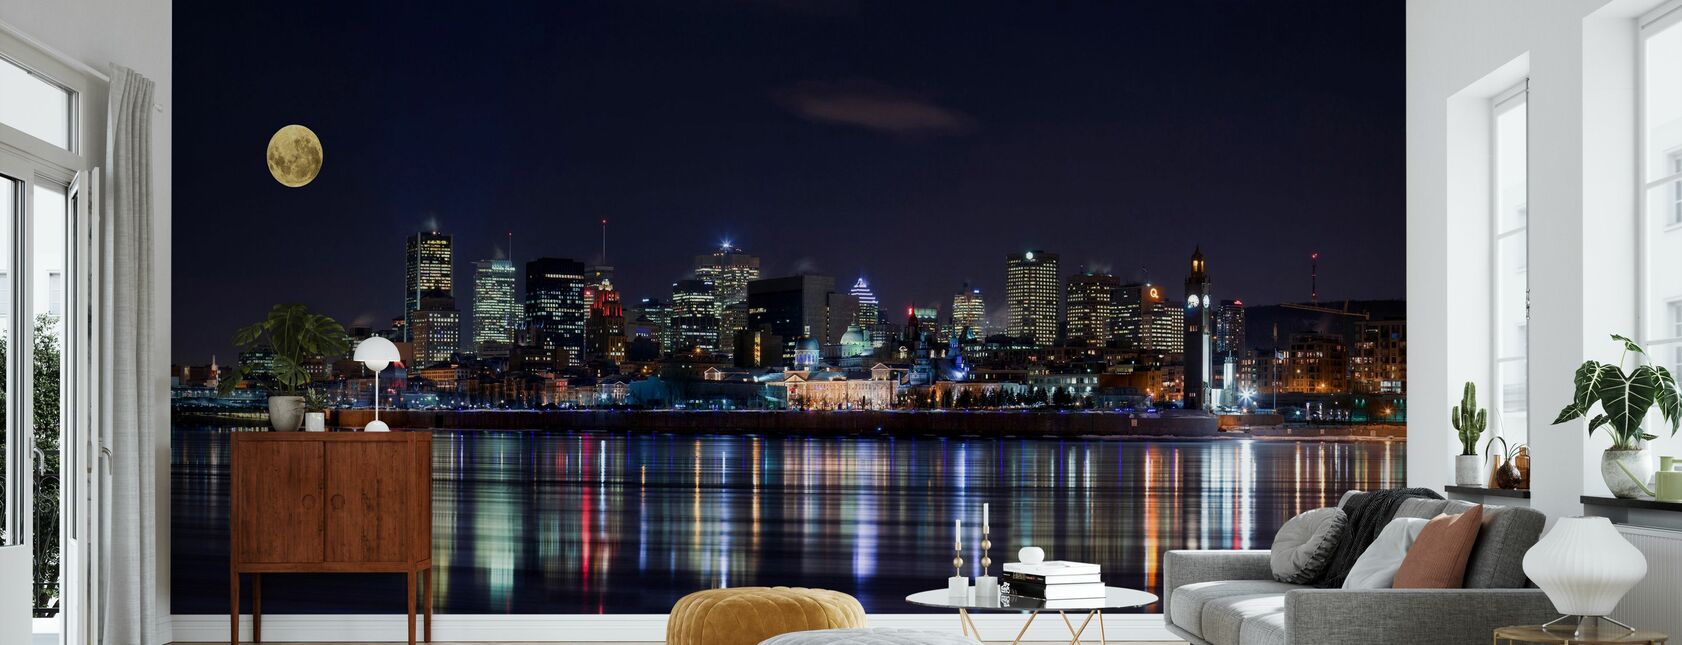 Montreal City Lights - Wallpaper - Living Room